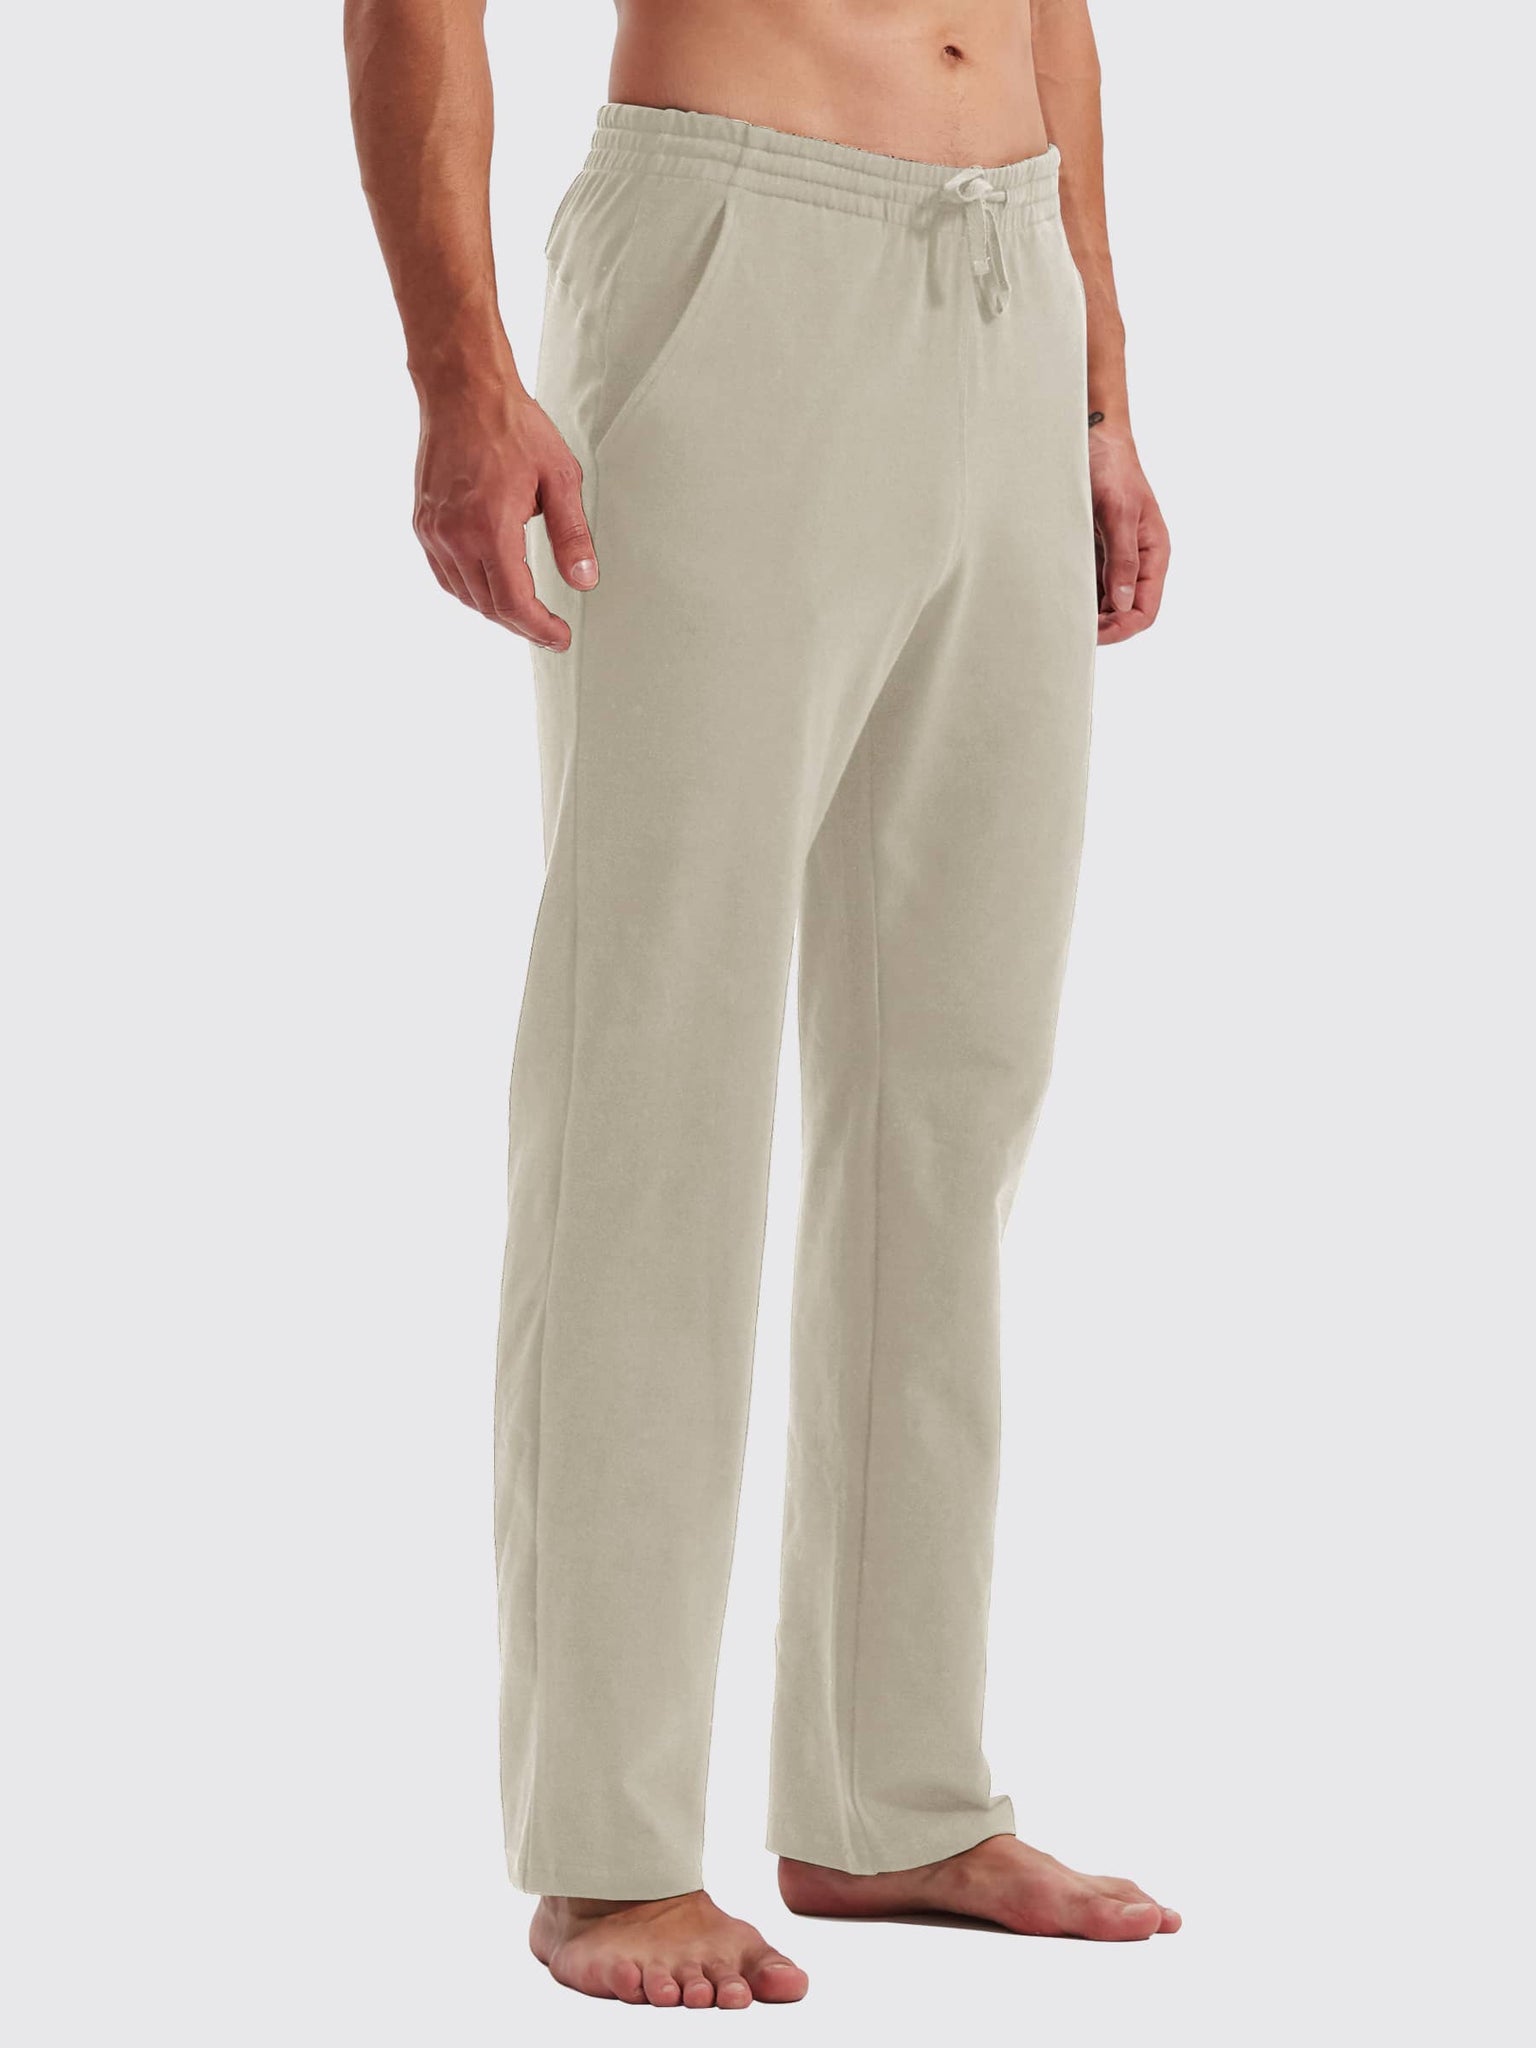 Men's Cotton Yoga Balance Sweatpants_Khaki_model3